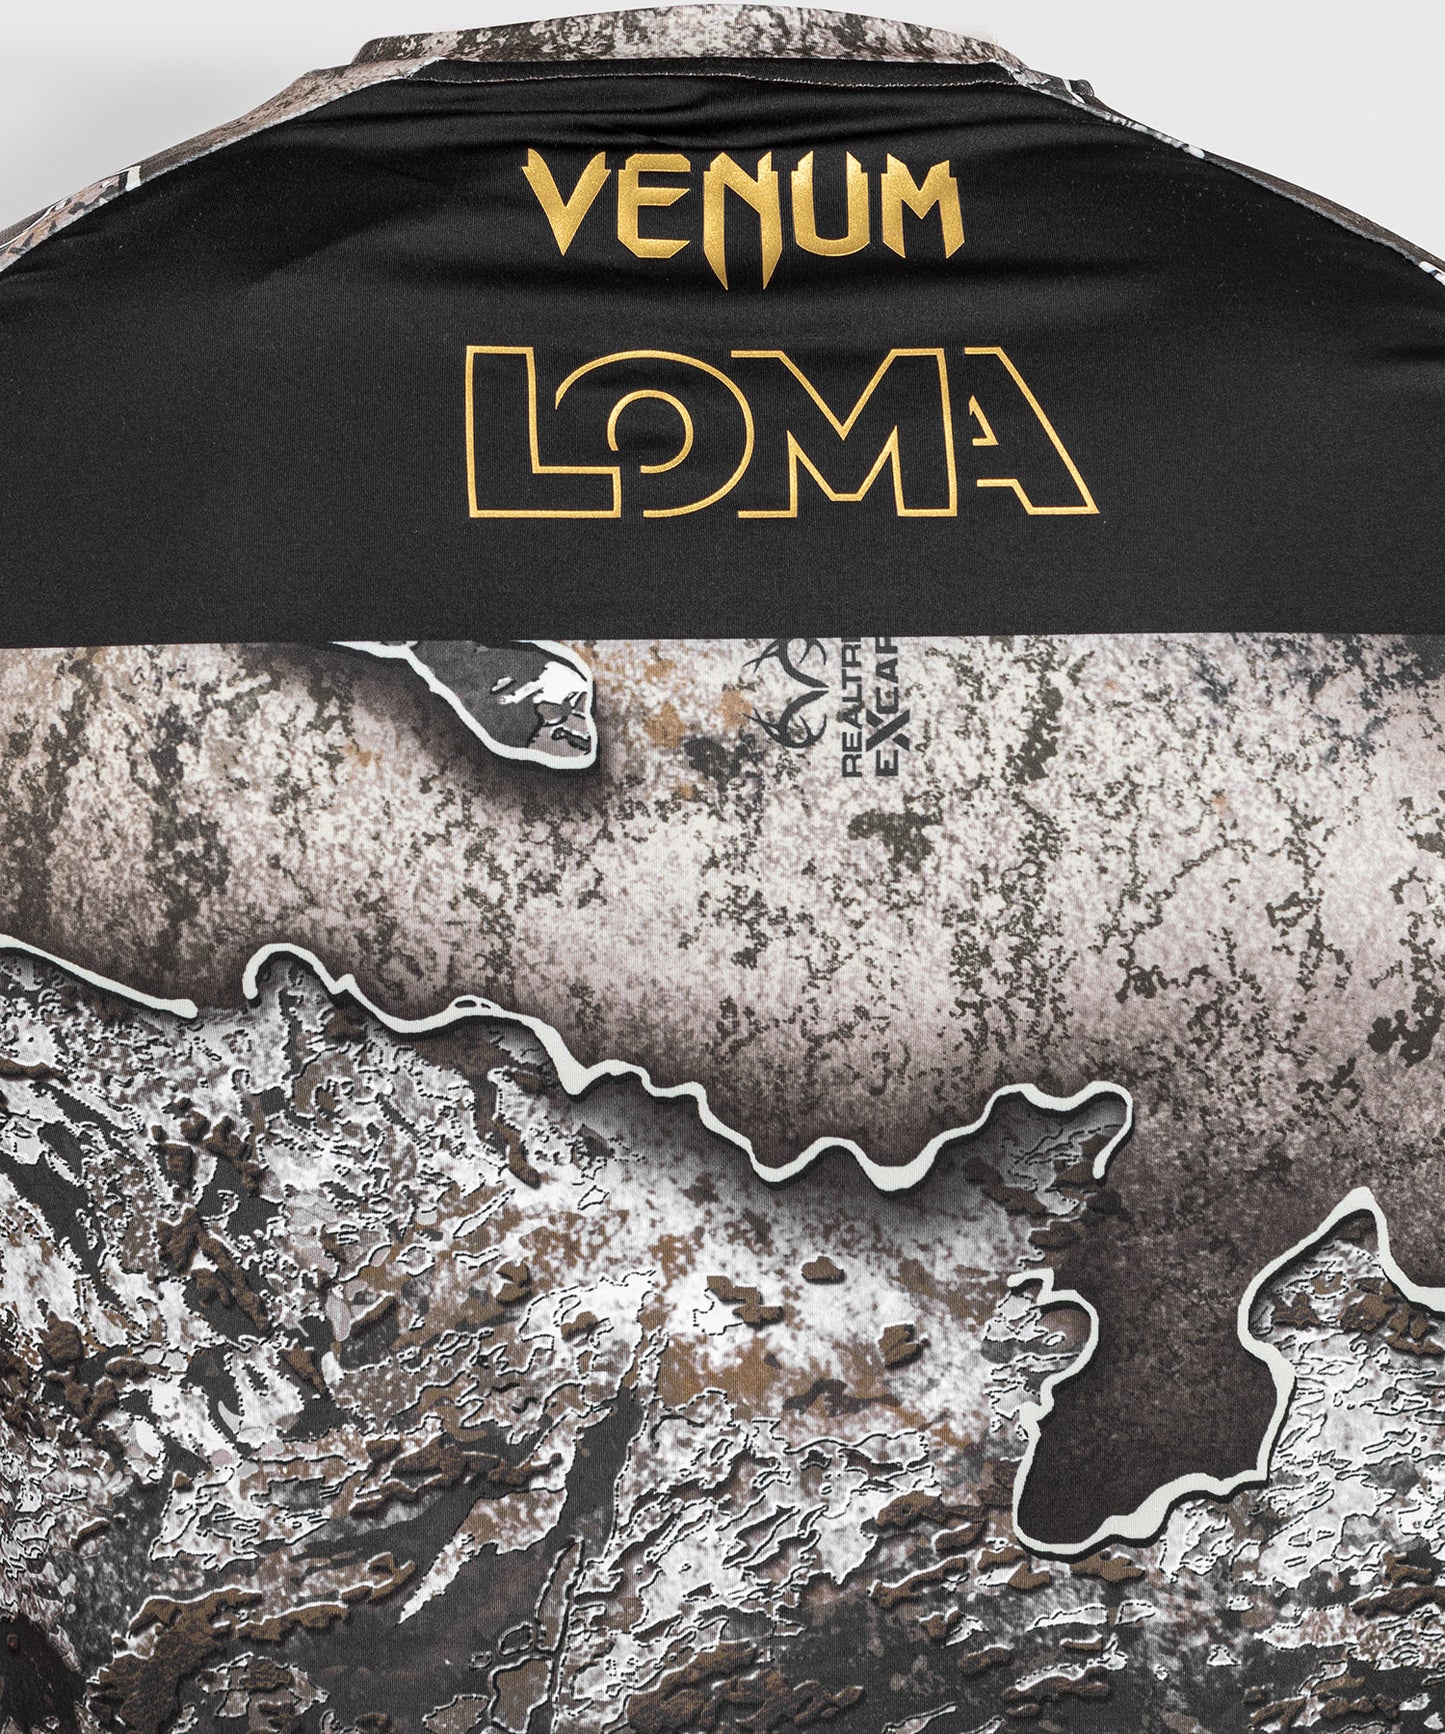 Offizielles Venum x Realtree Loma Dry Tech T-Shirt – Oktober 2022